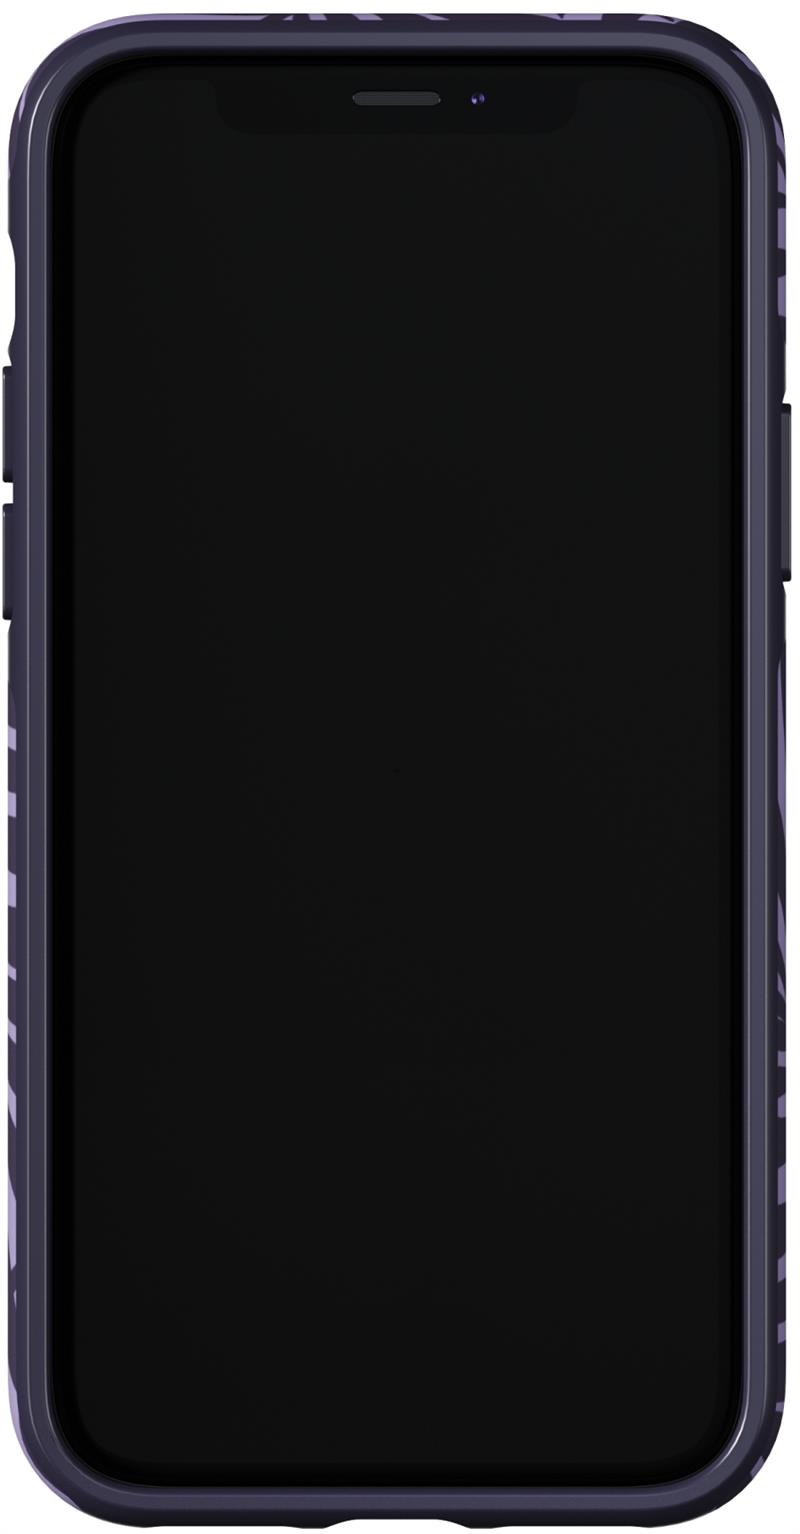 Richmond Finch Freedom Series Apple iPhone 11 Pro Purple Palm